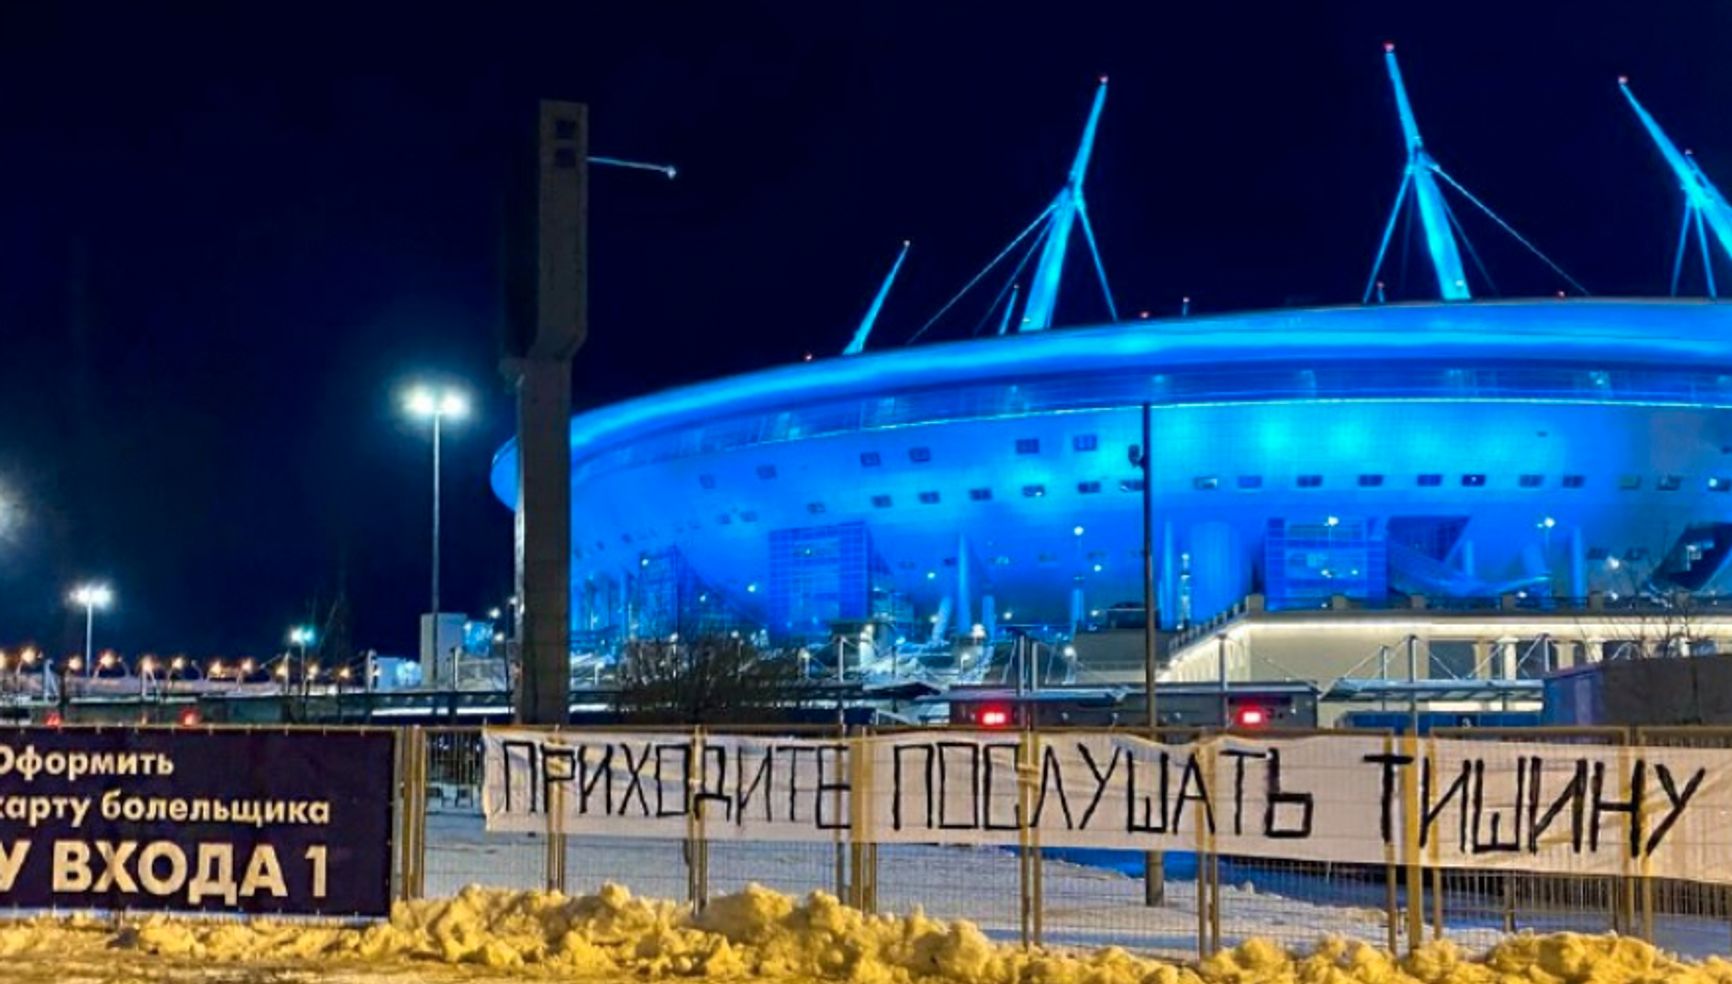 Футболистам «Зенита» включили запись шума фанатов на «Газпром Арене» из-за минимального числа зрителей со времен пандемии — «Фонтанка» 